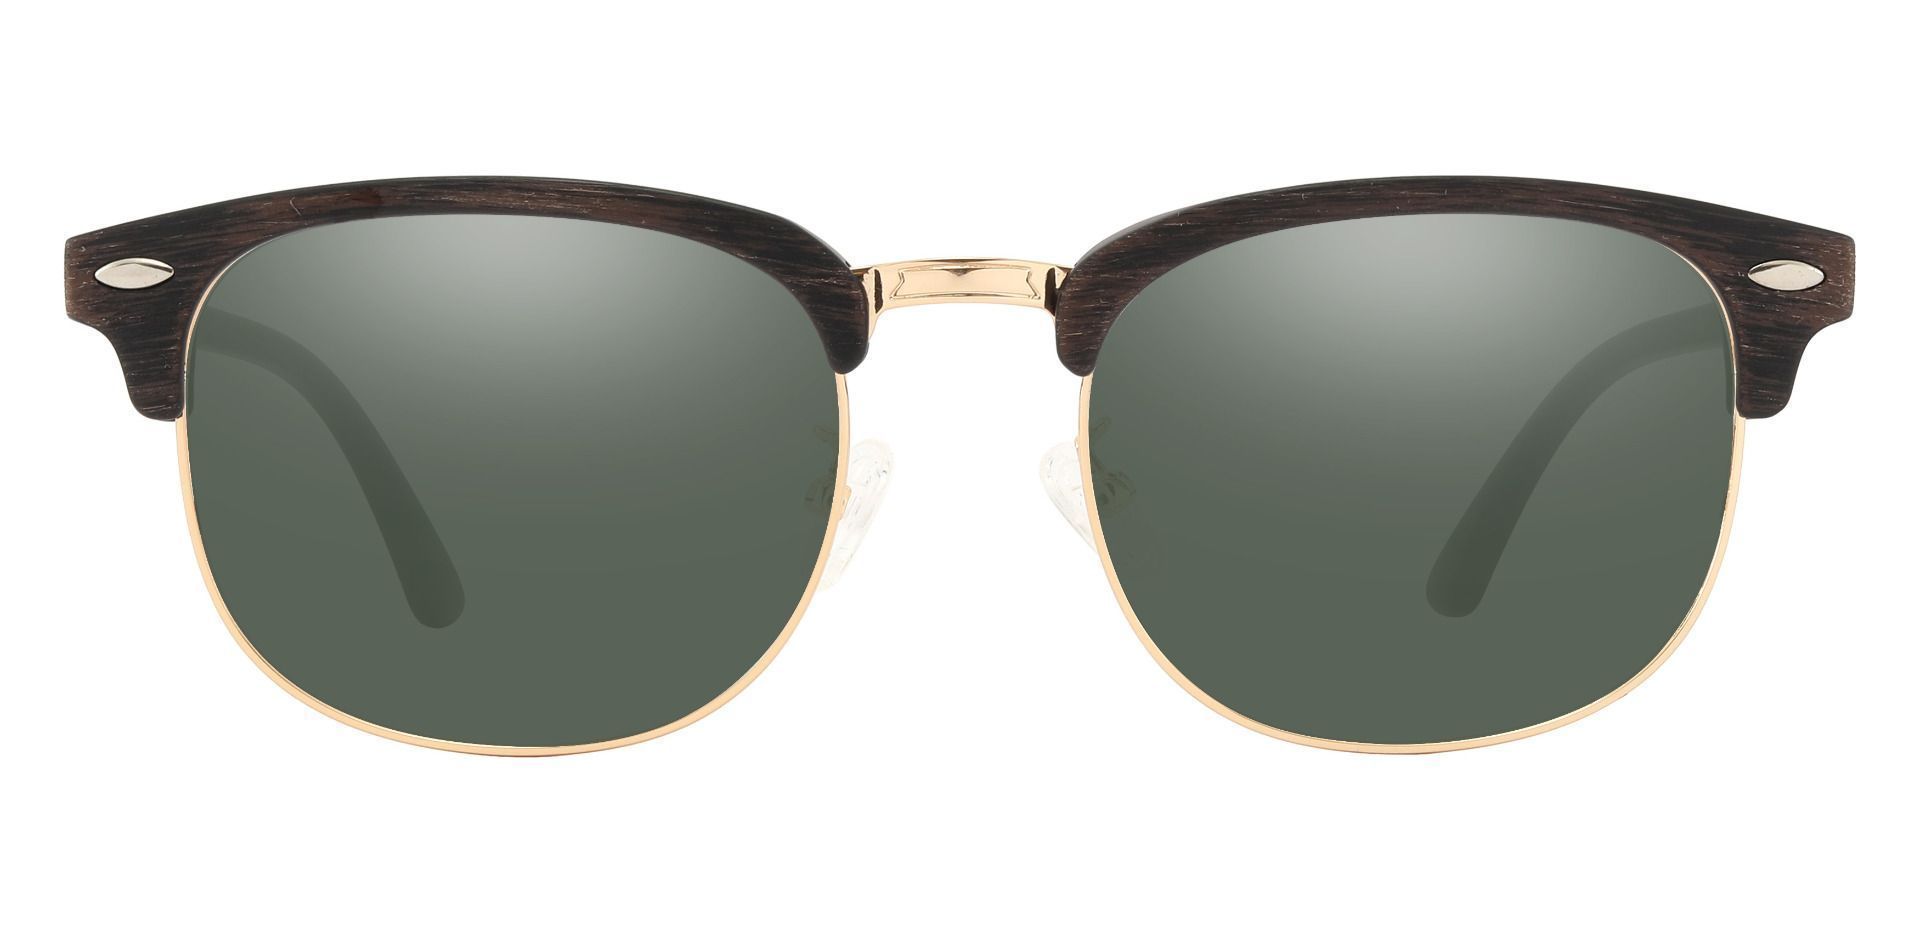 Tulsa Browline Prescription Sunglasses - Brown Frame With Green Lenses ...